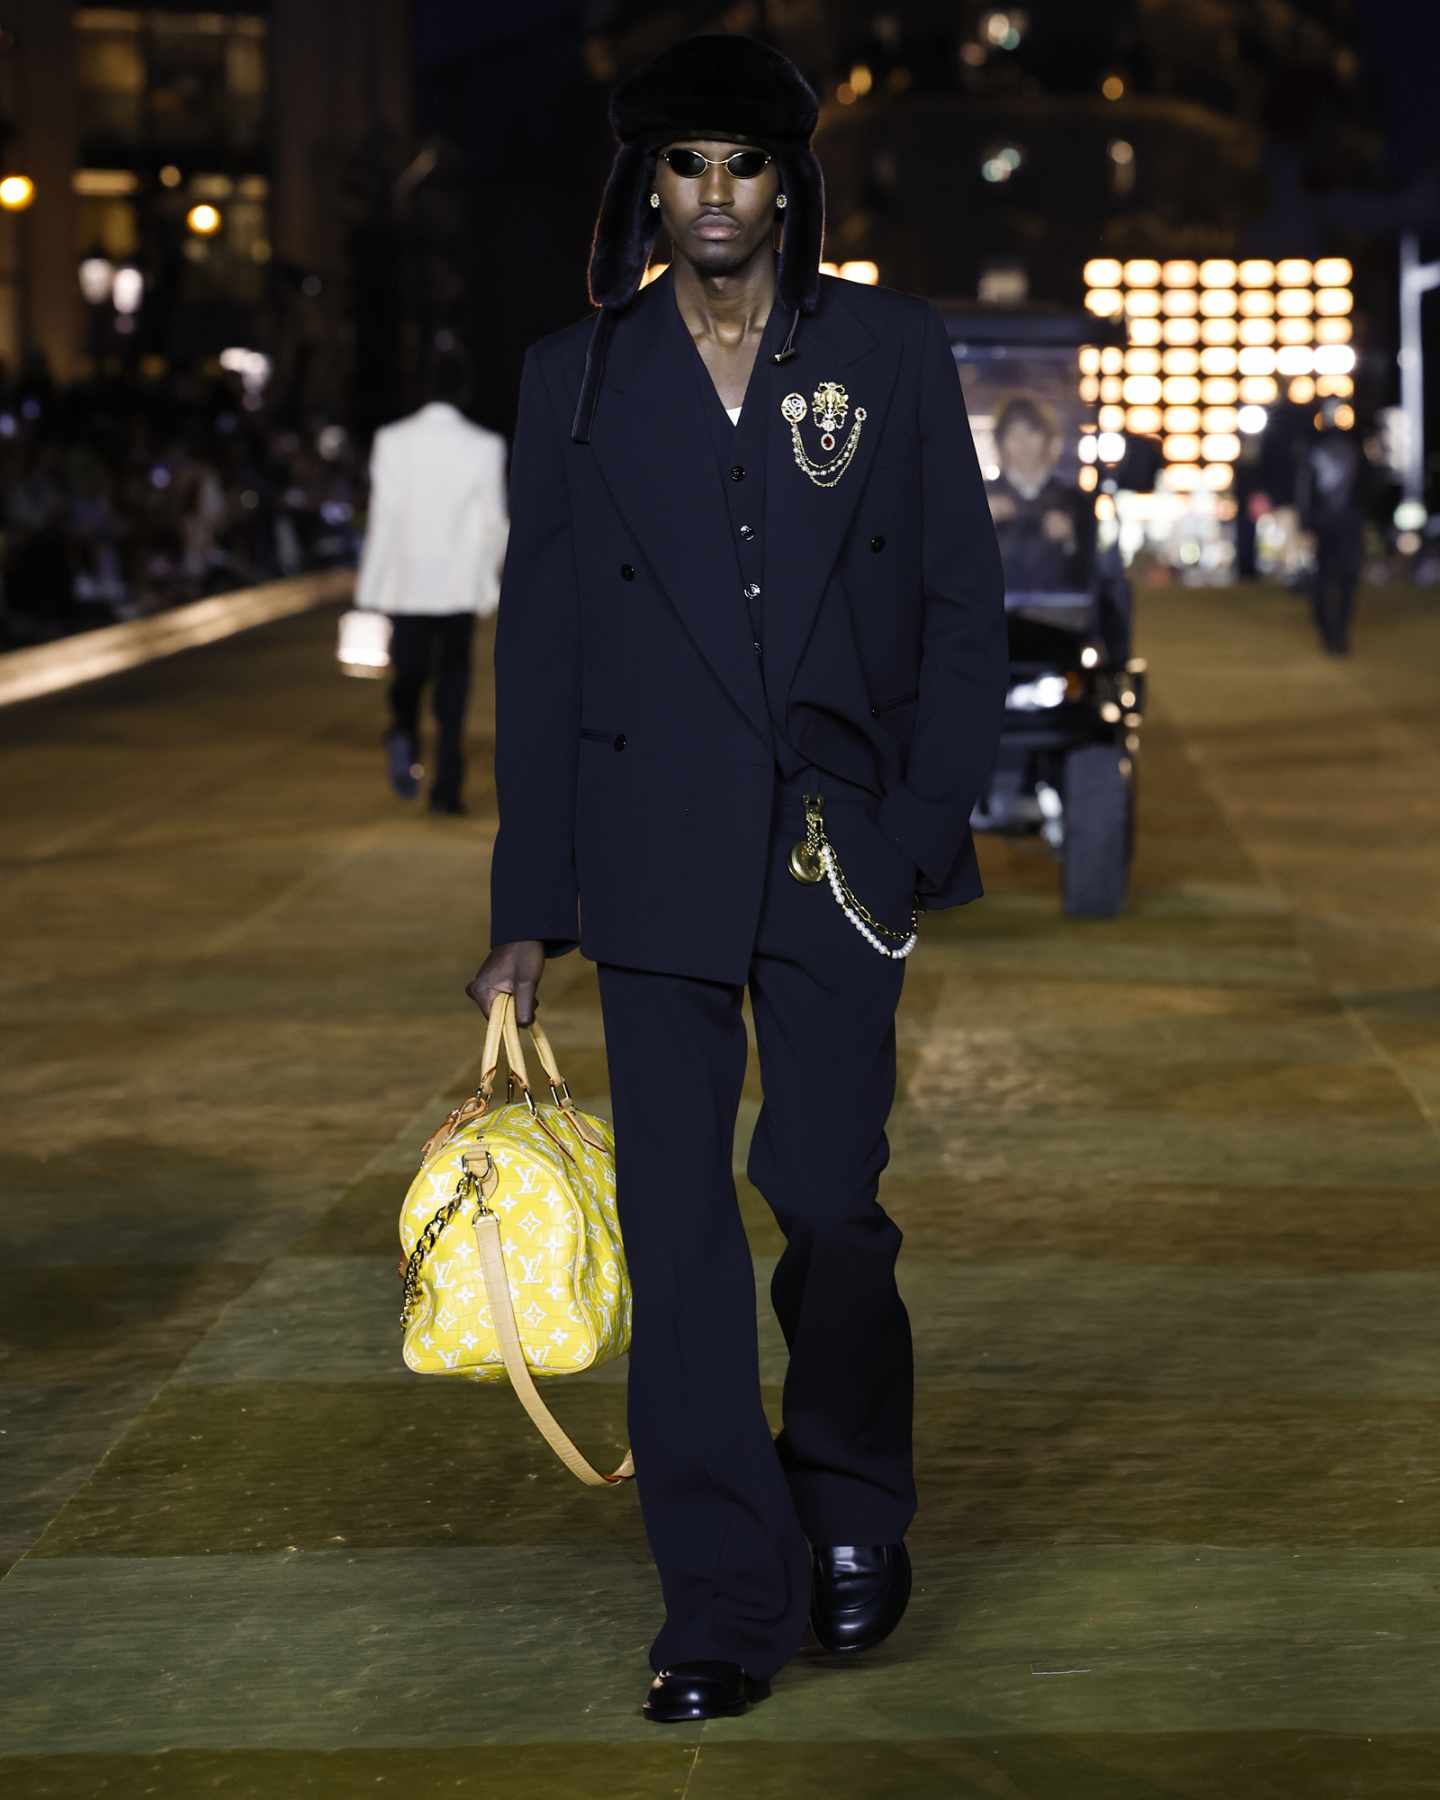 Brilliant Luxury  Louis vuitton crossbody bag, Louis vuitton, Bags